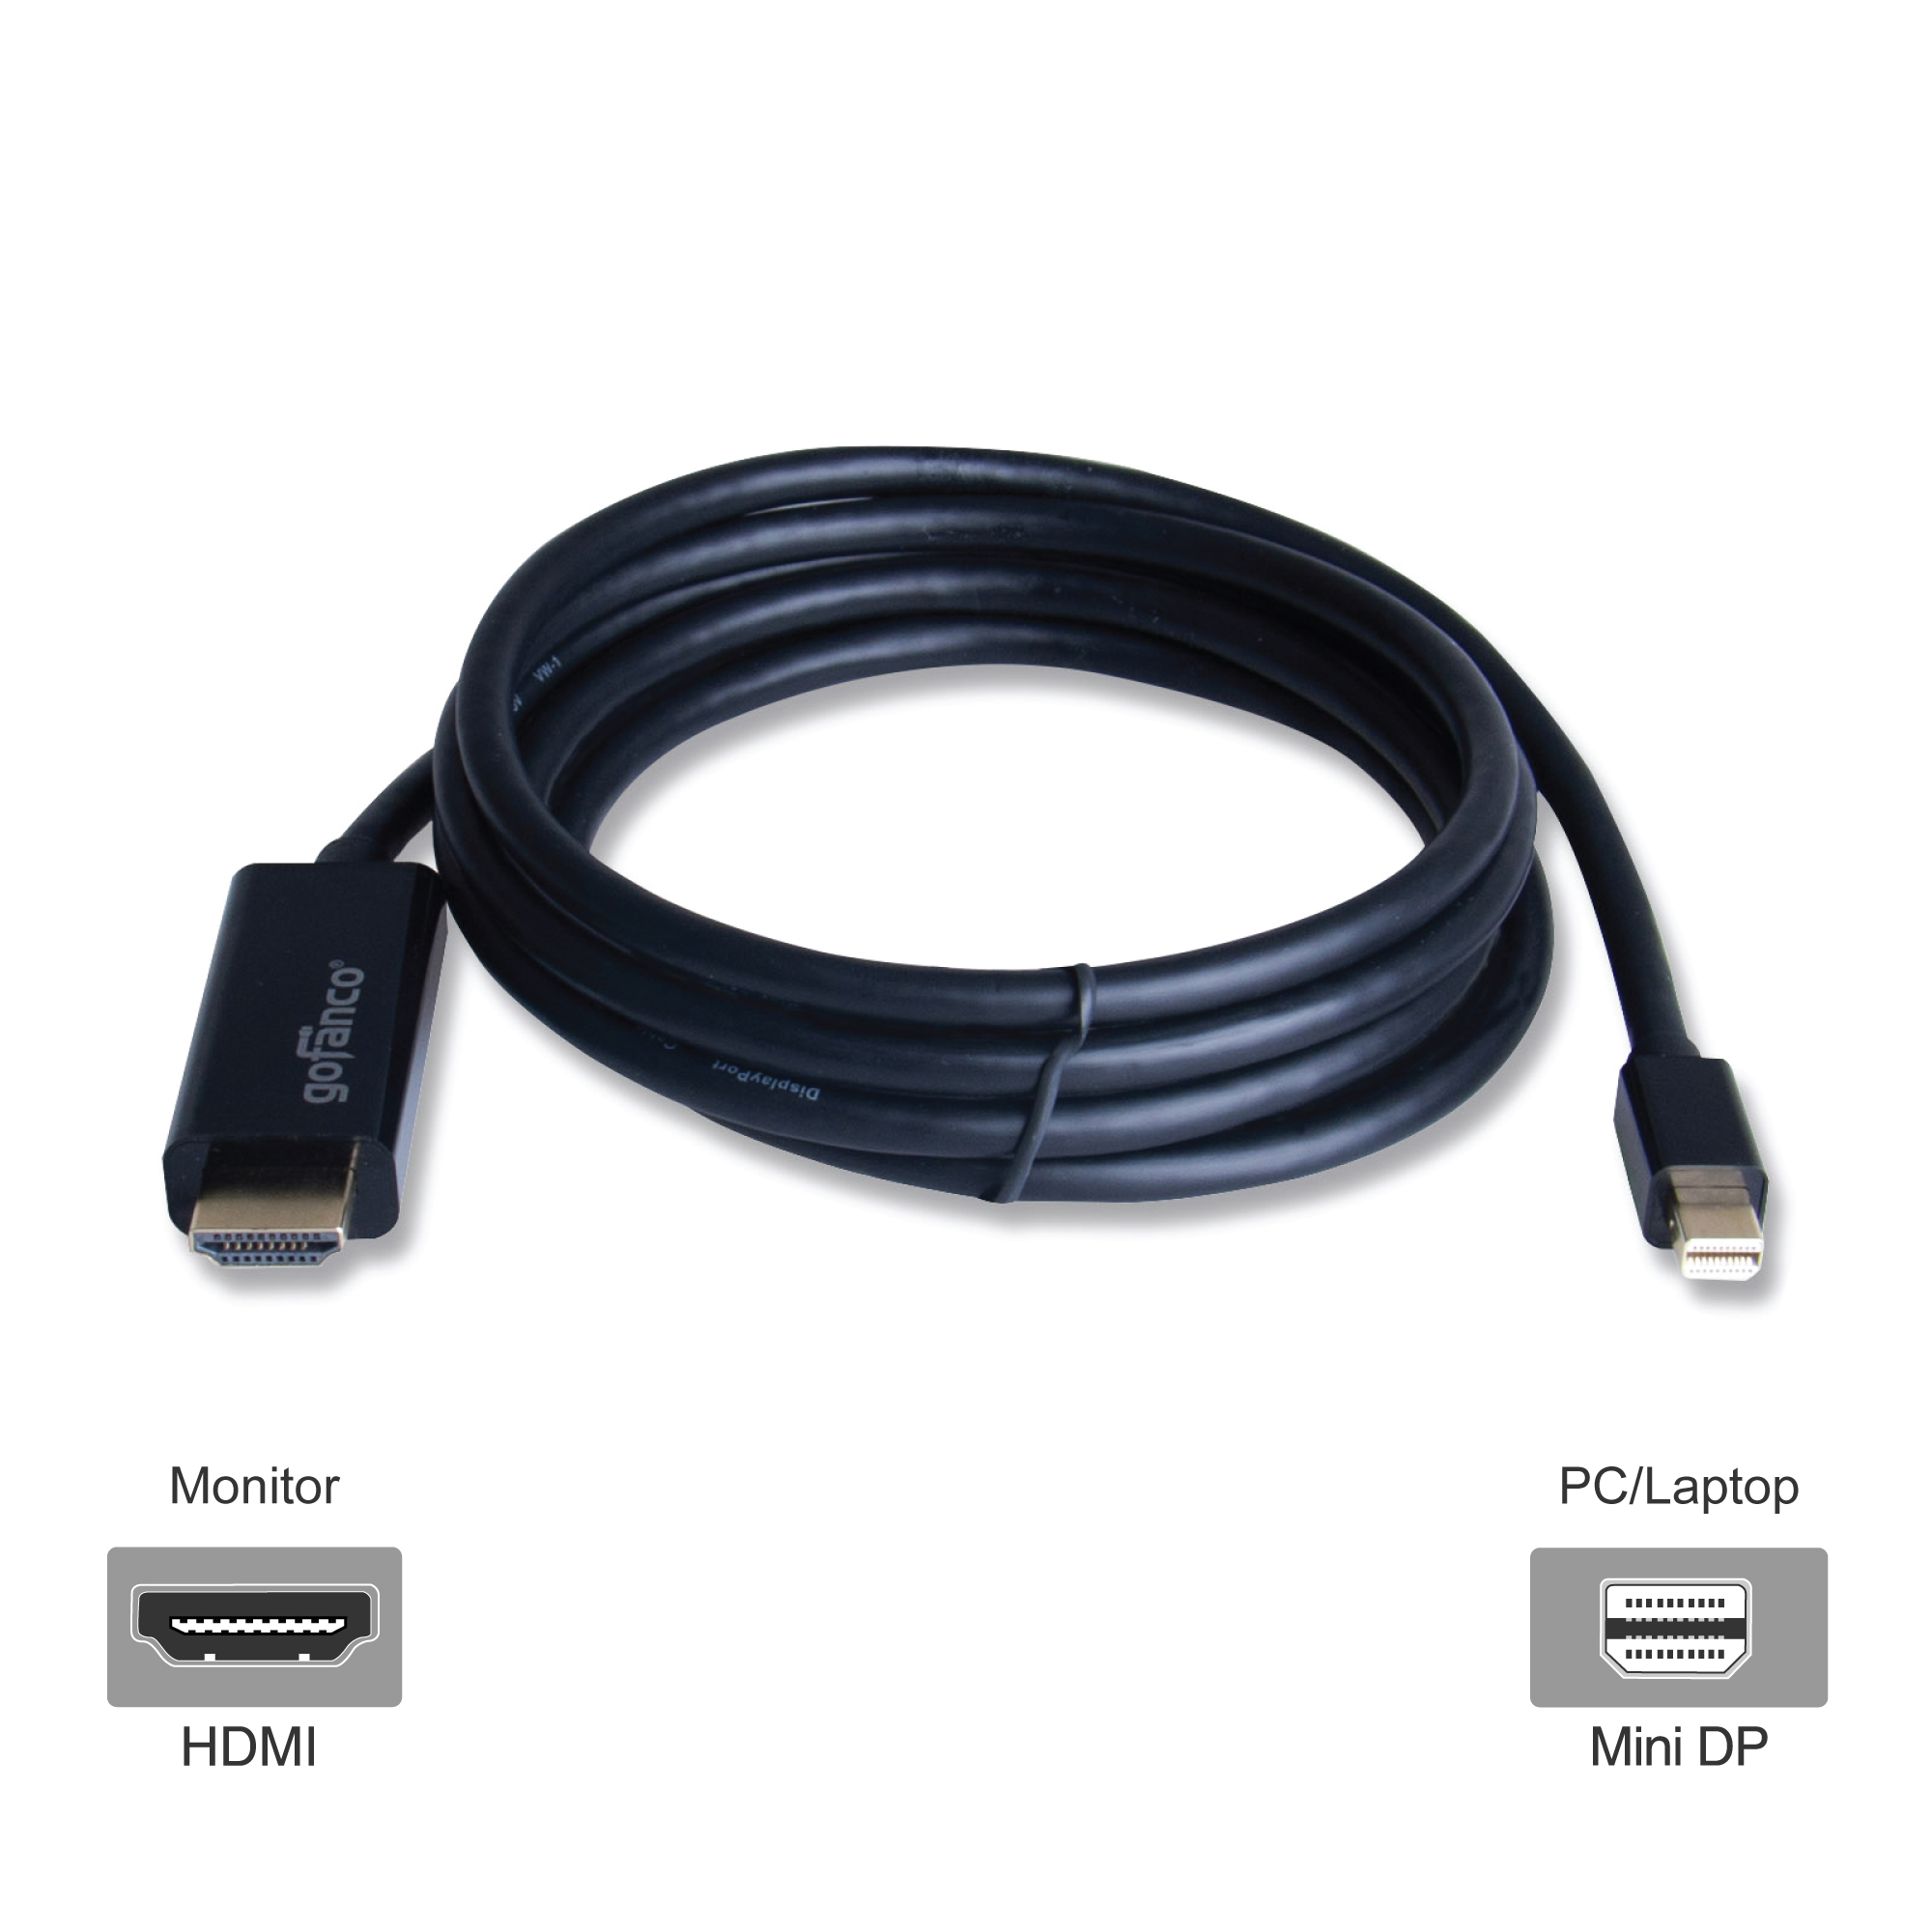 6 Mini DisplayPort v1.2 to HDMI Cable Adapter gofanco